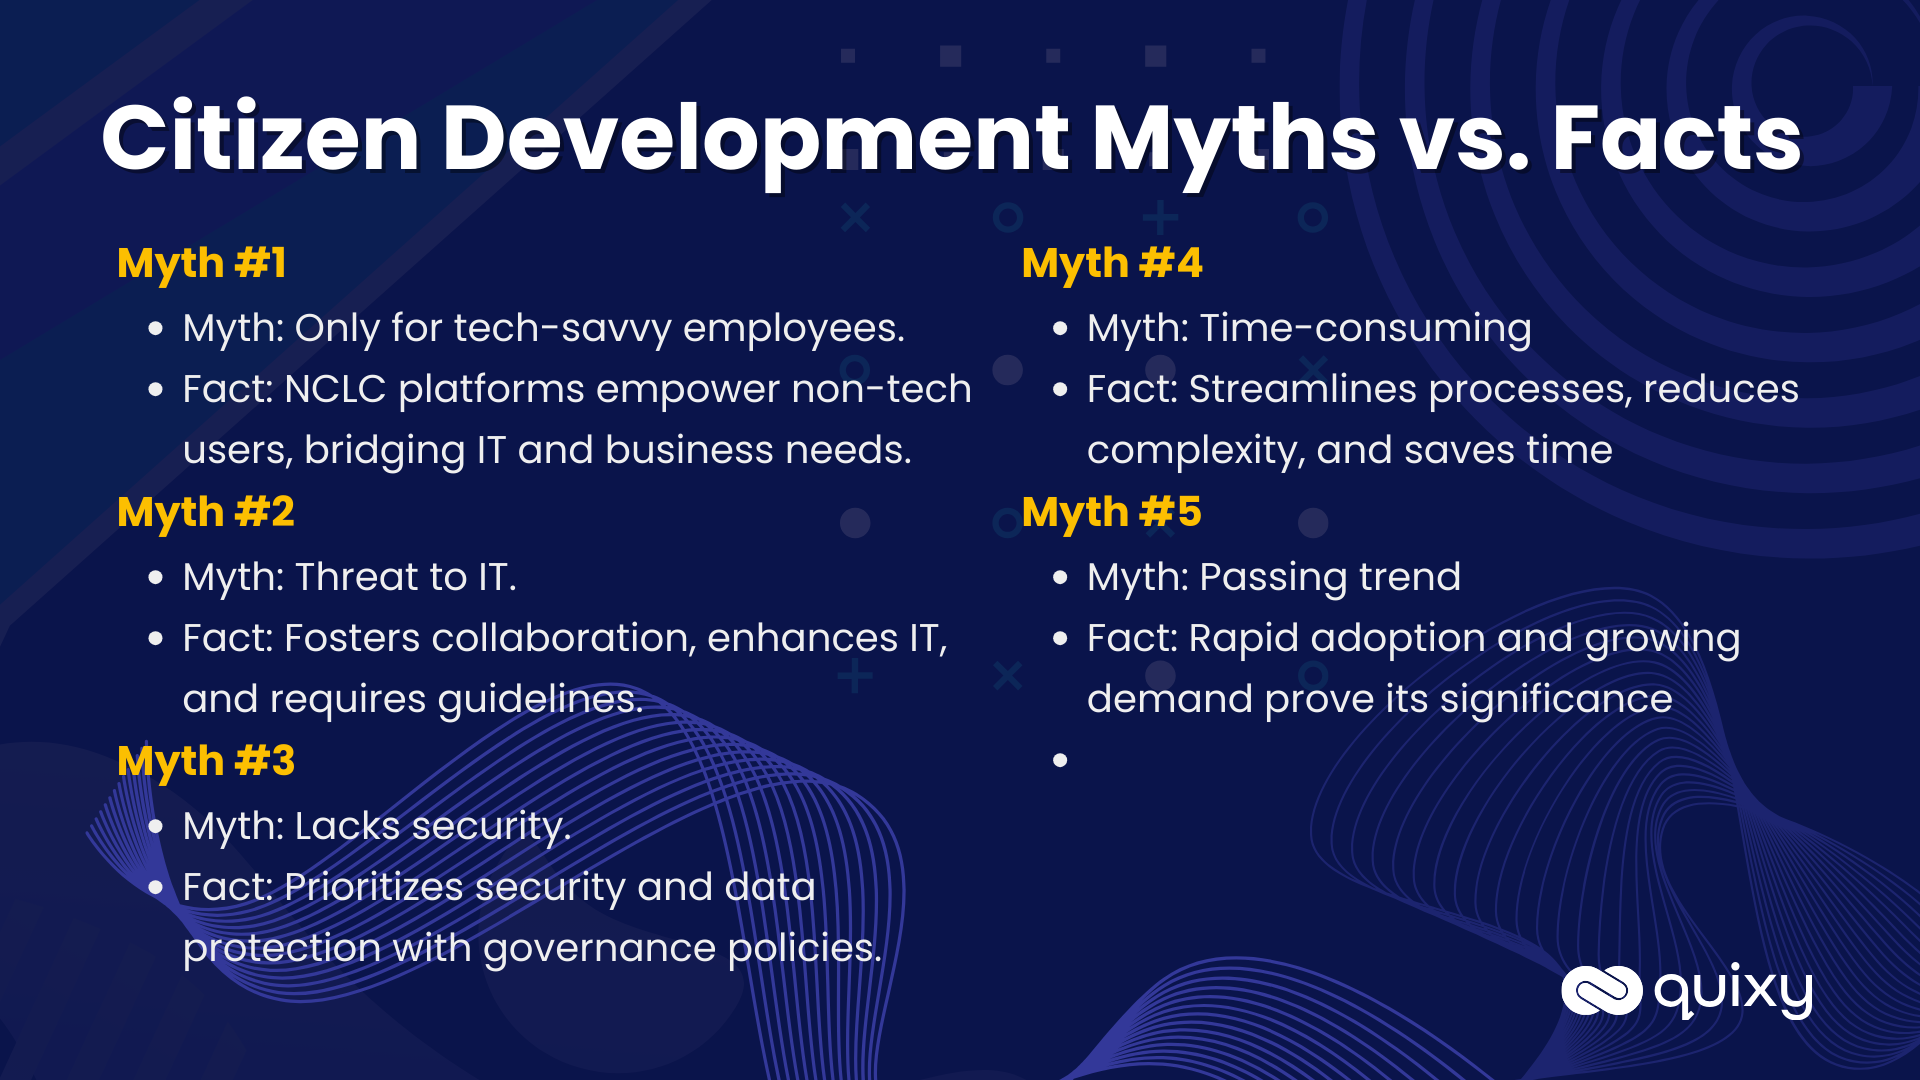 Myths vs. facts of citizen development